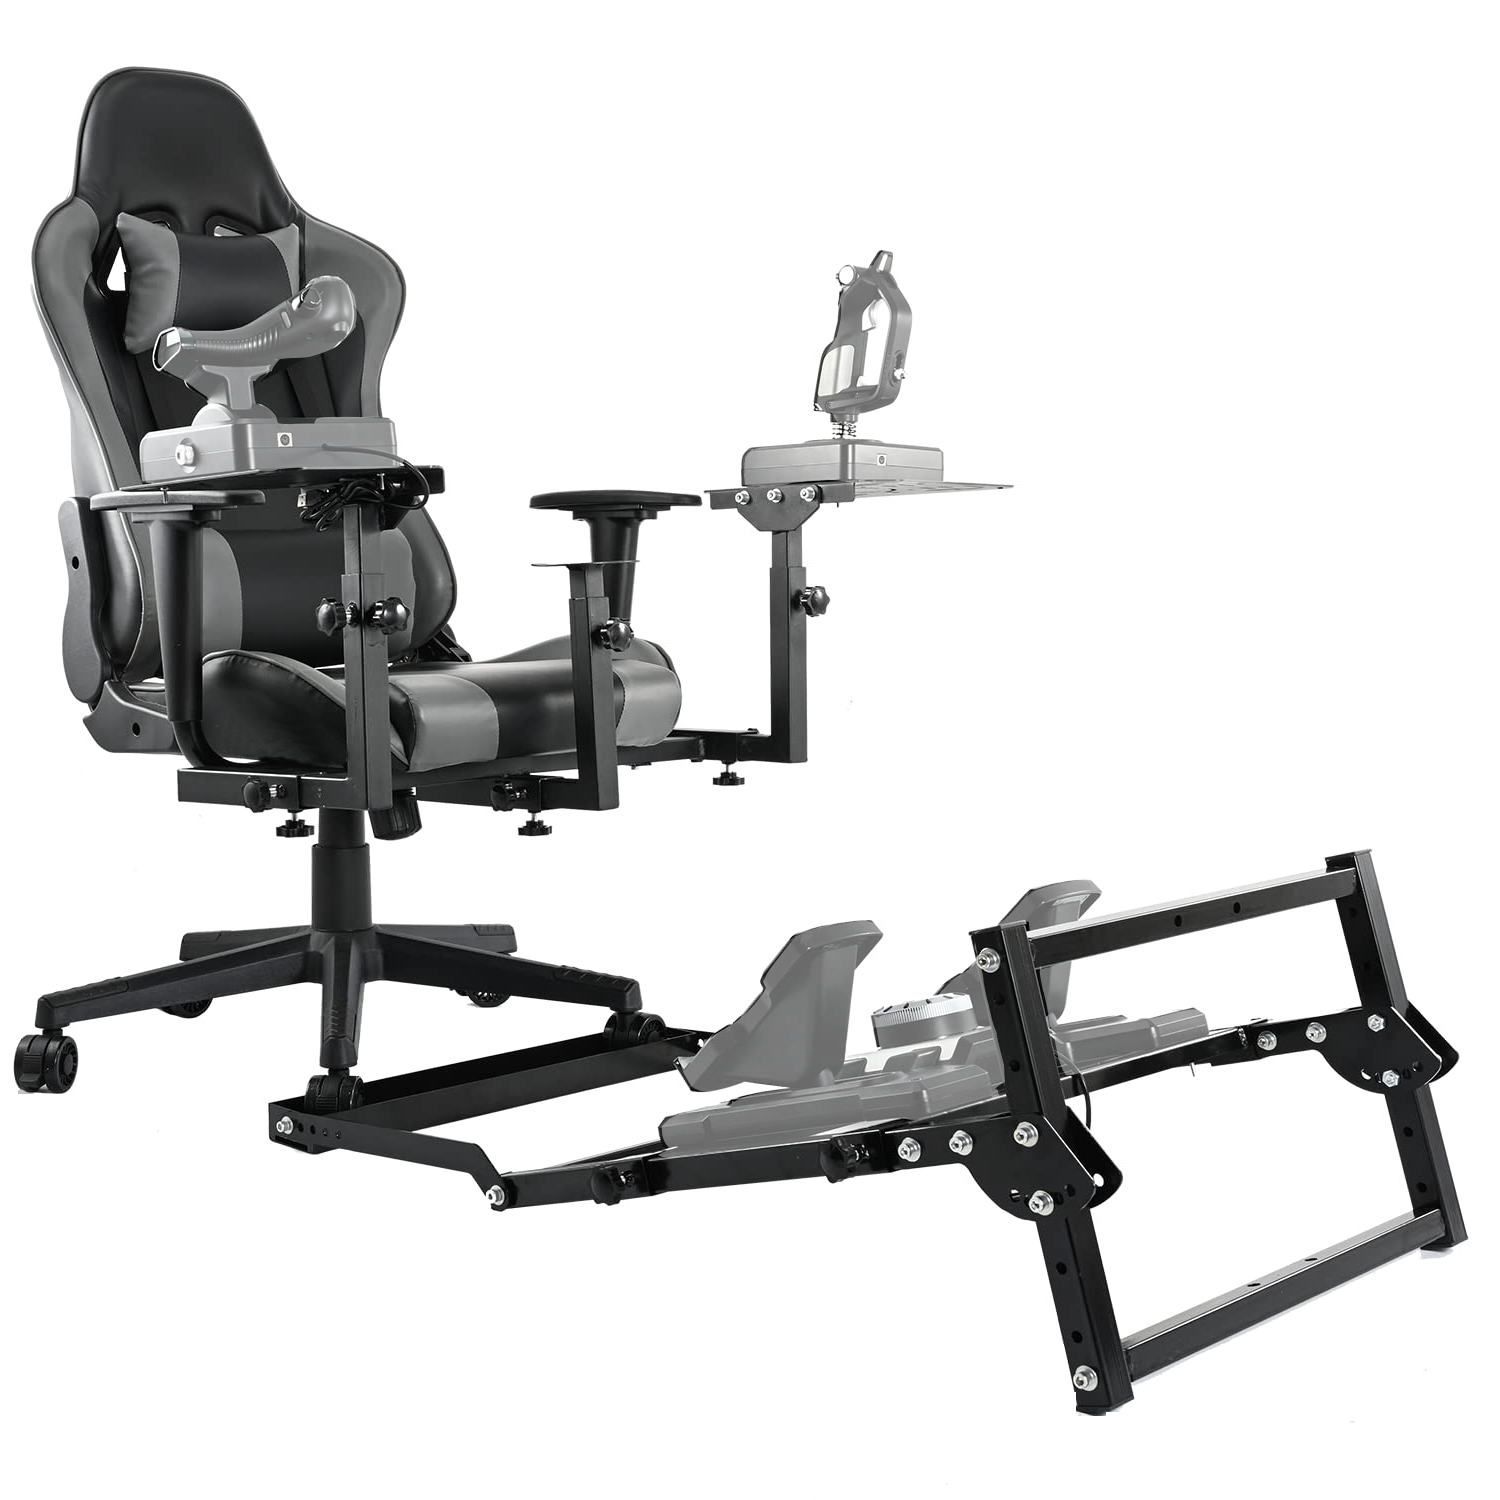 Minneer Flight Joystick Hotas Mount with Chair Pedal Mount Fit Thrustmaster Logitech A10C Hotas Warthog